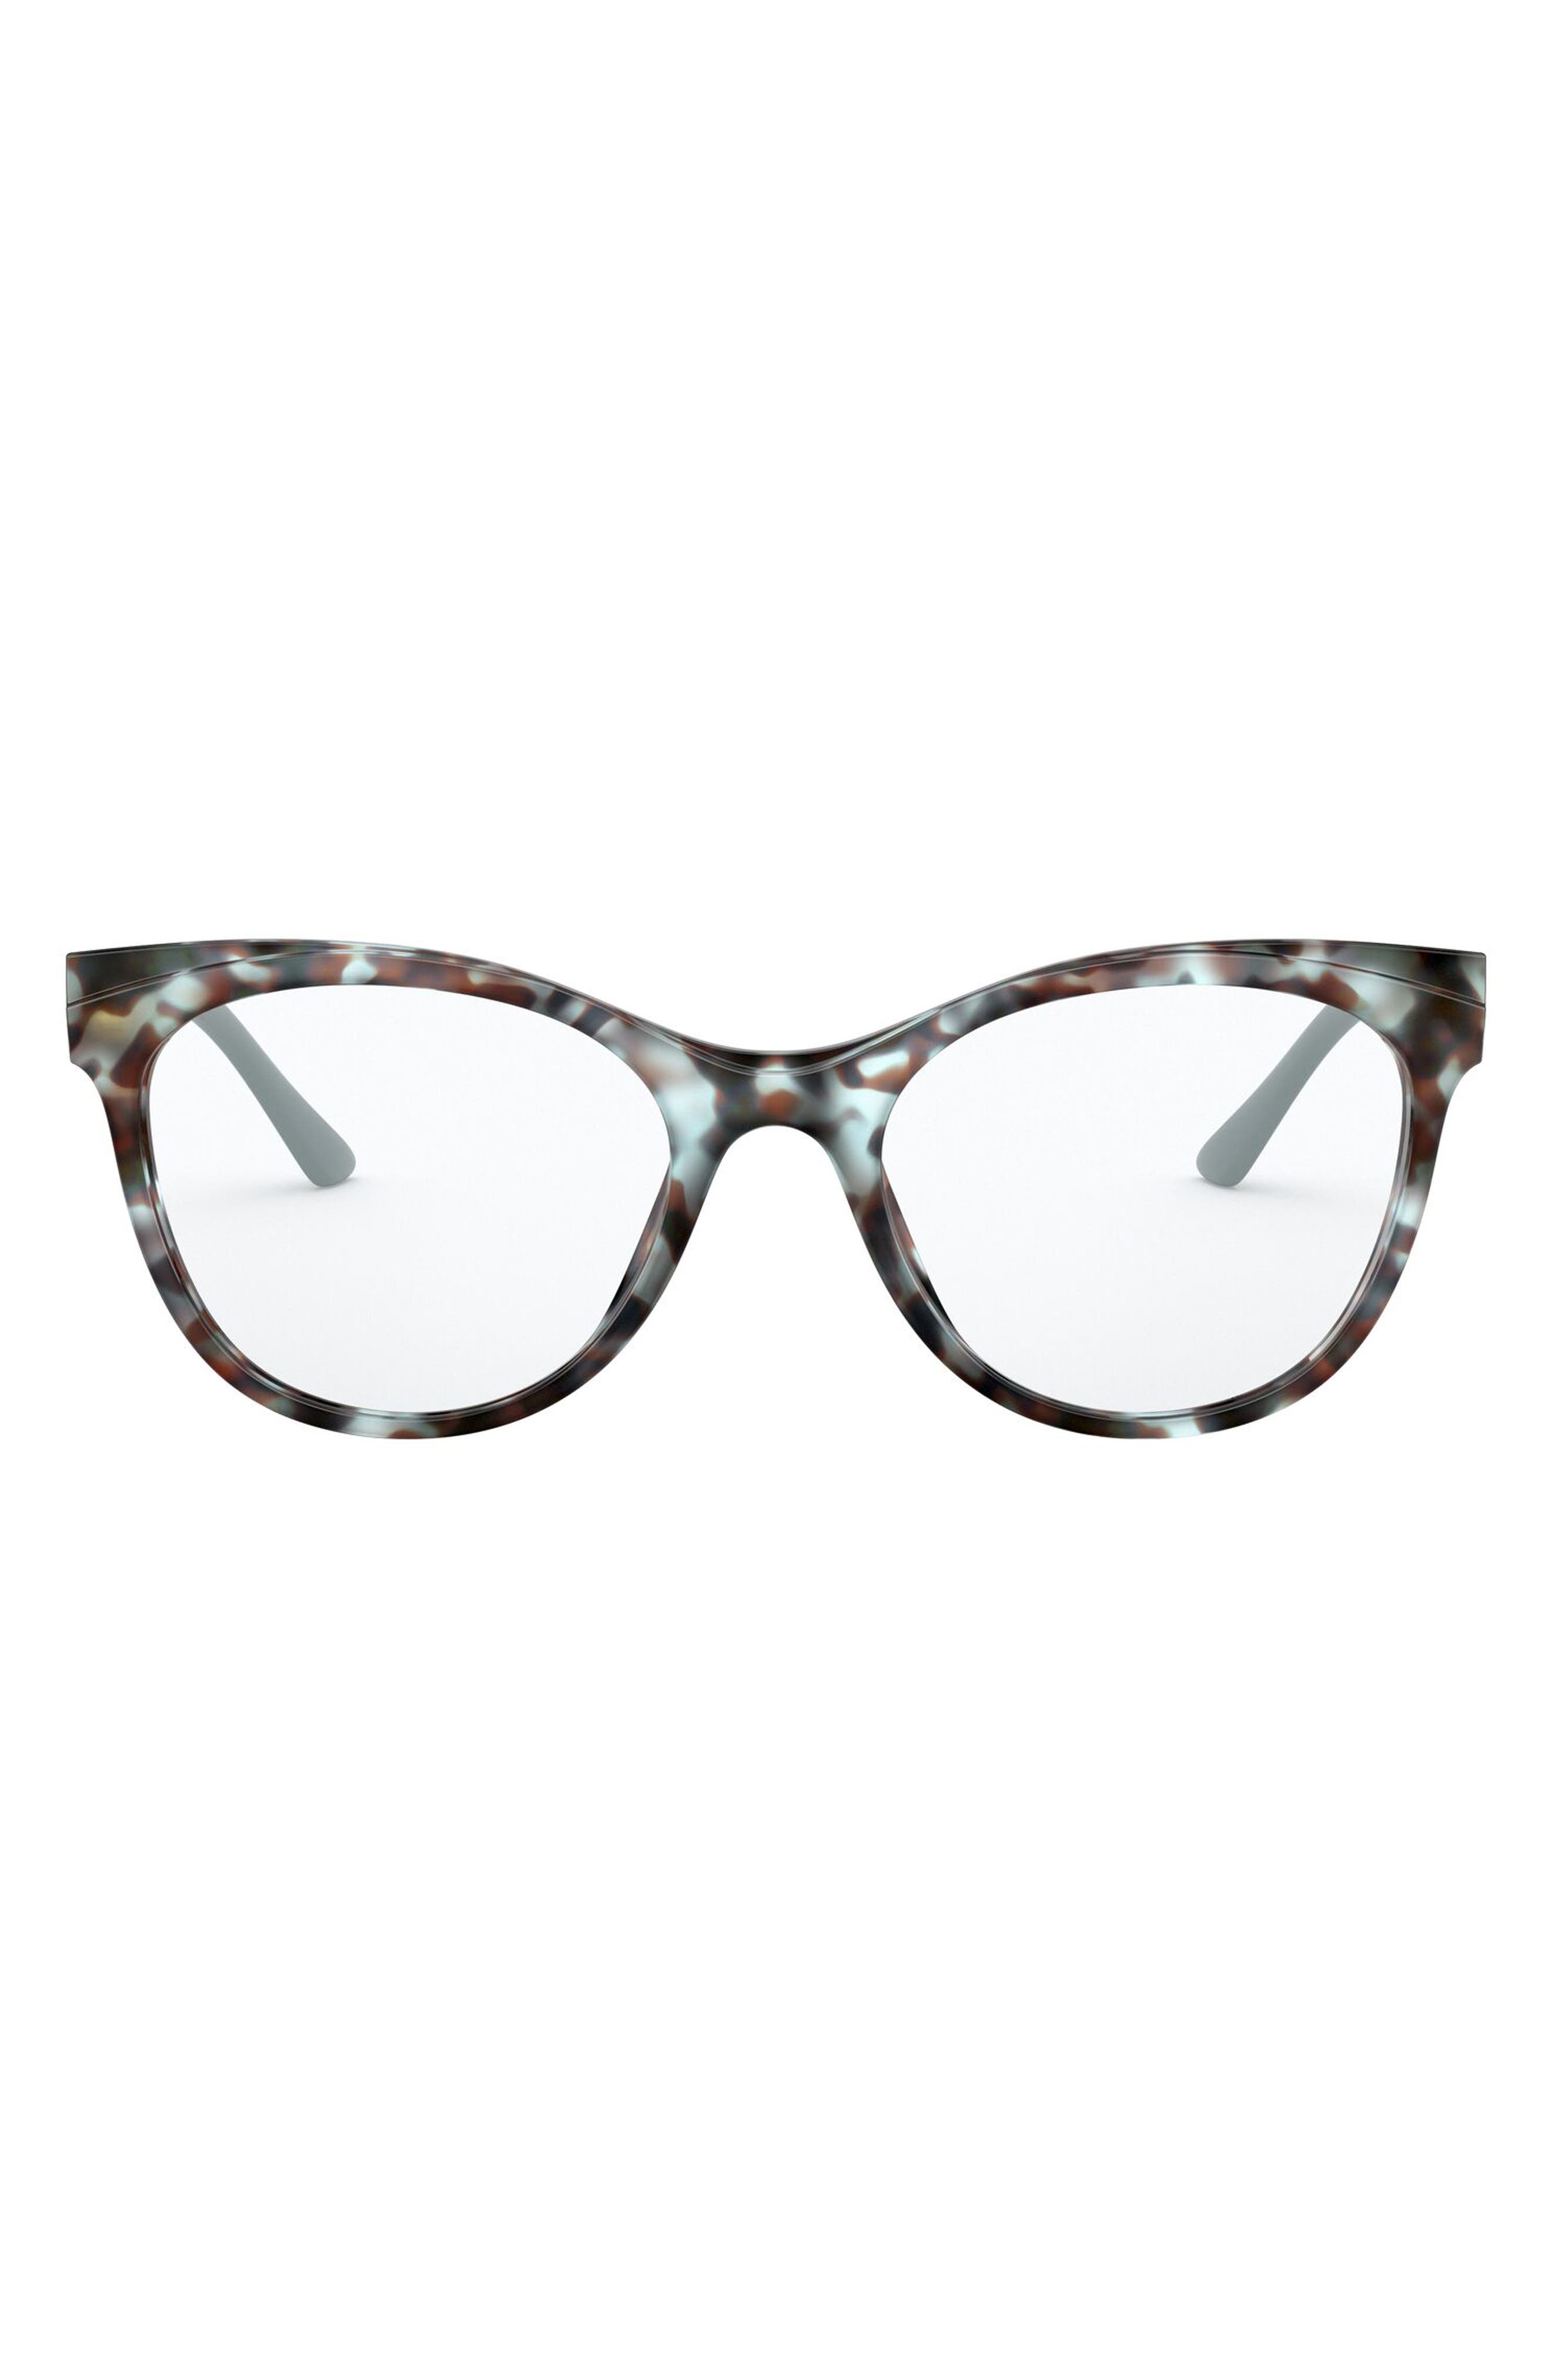 Prada 51mm Cat Eye Optical Glasses in Blue/brown/demo Lens at Nordstrom